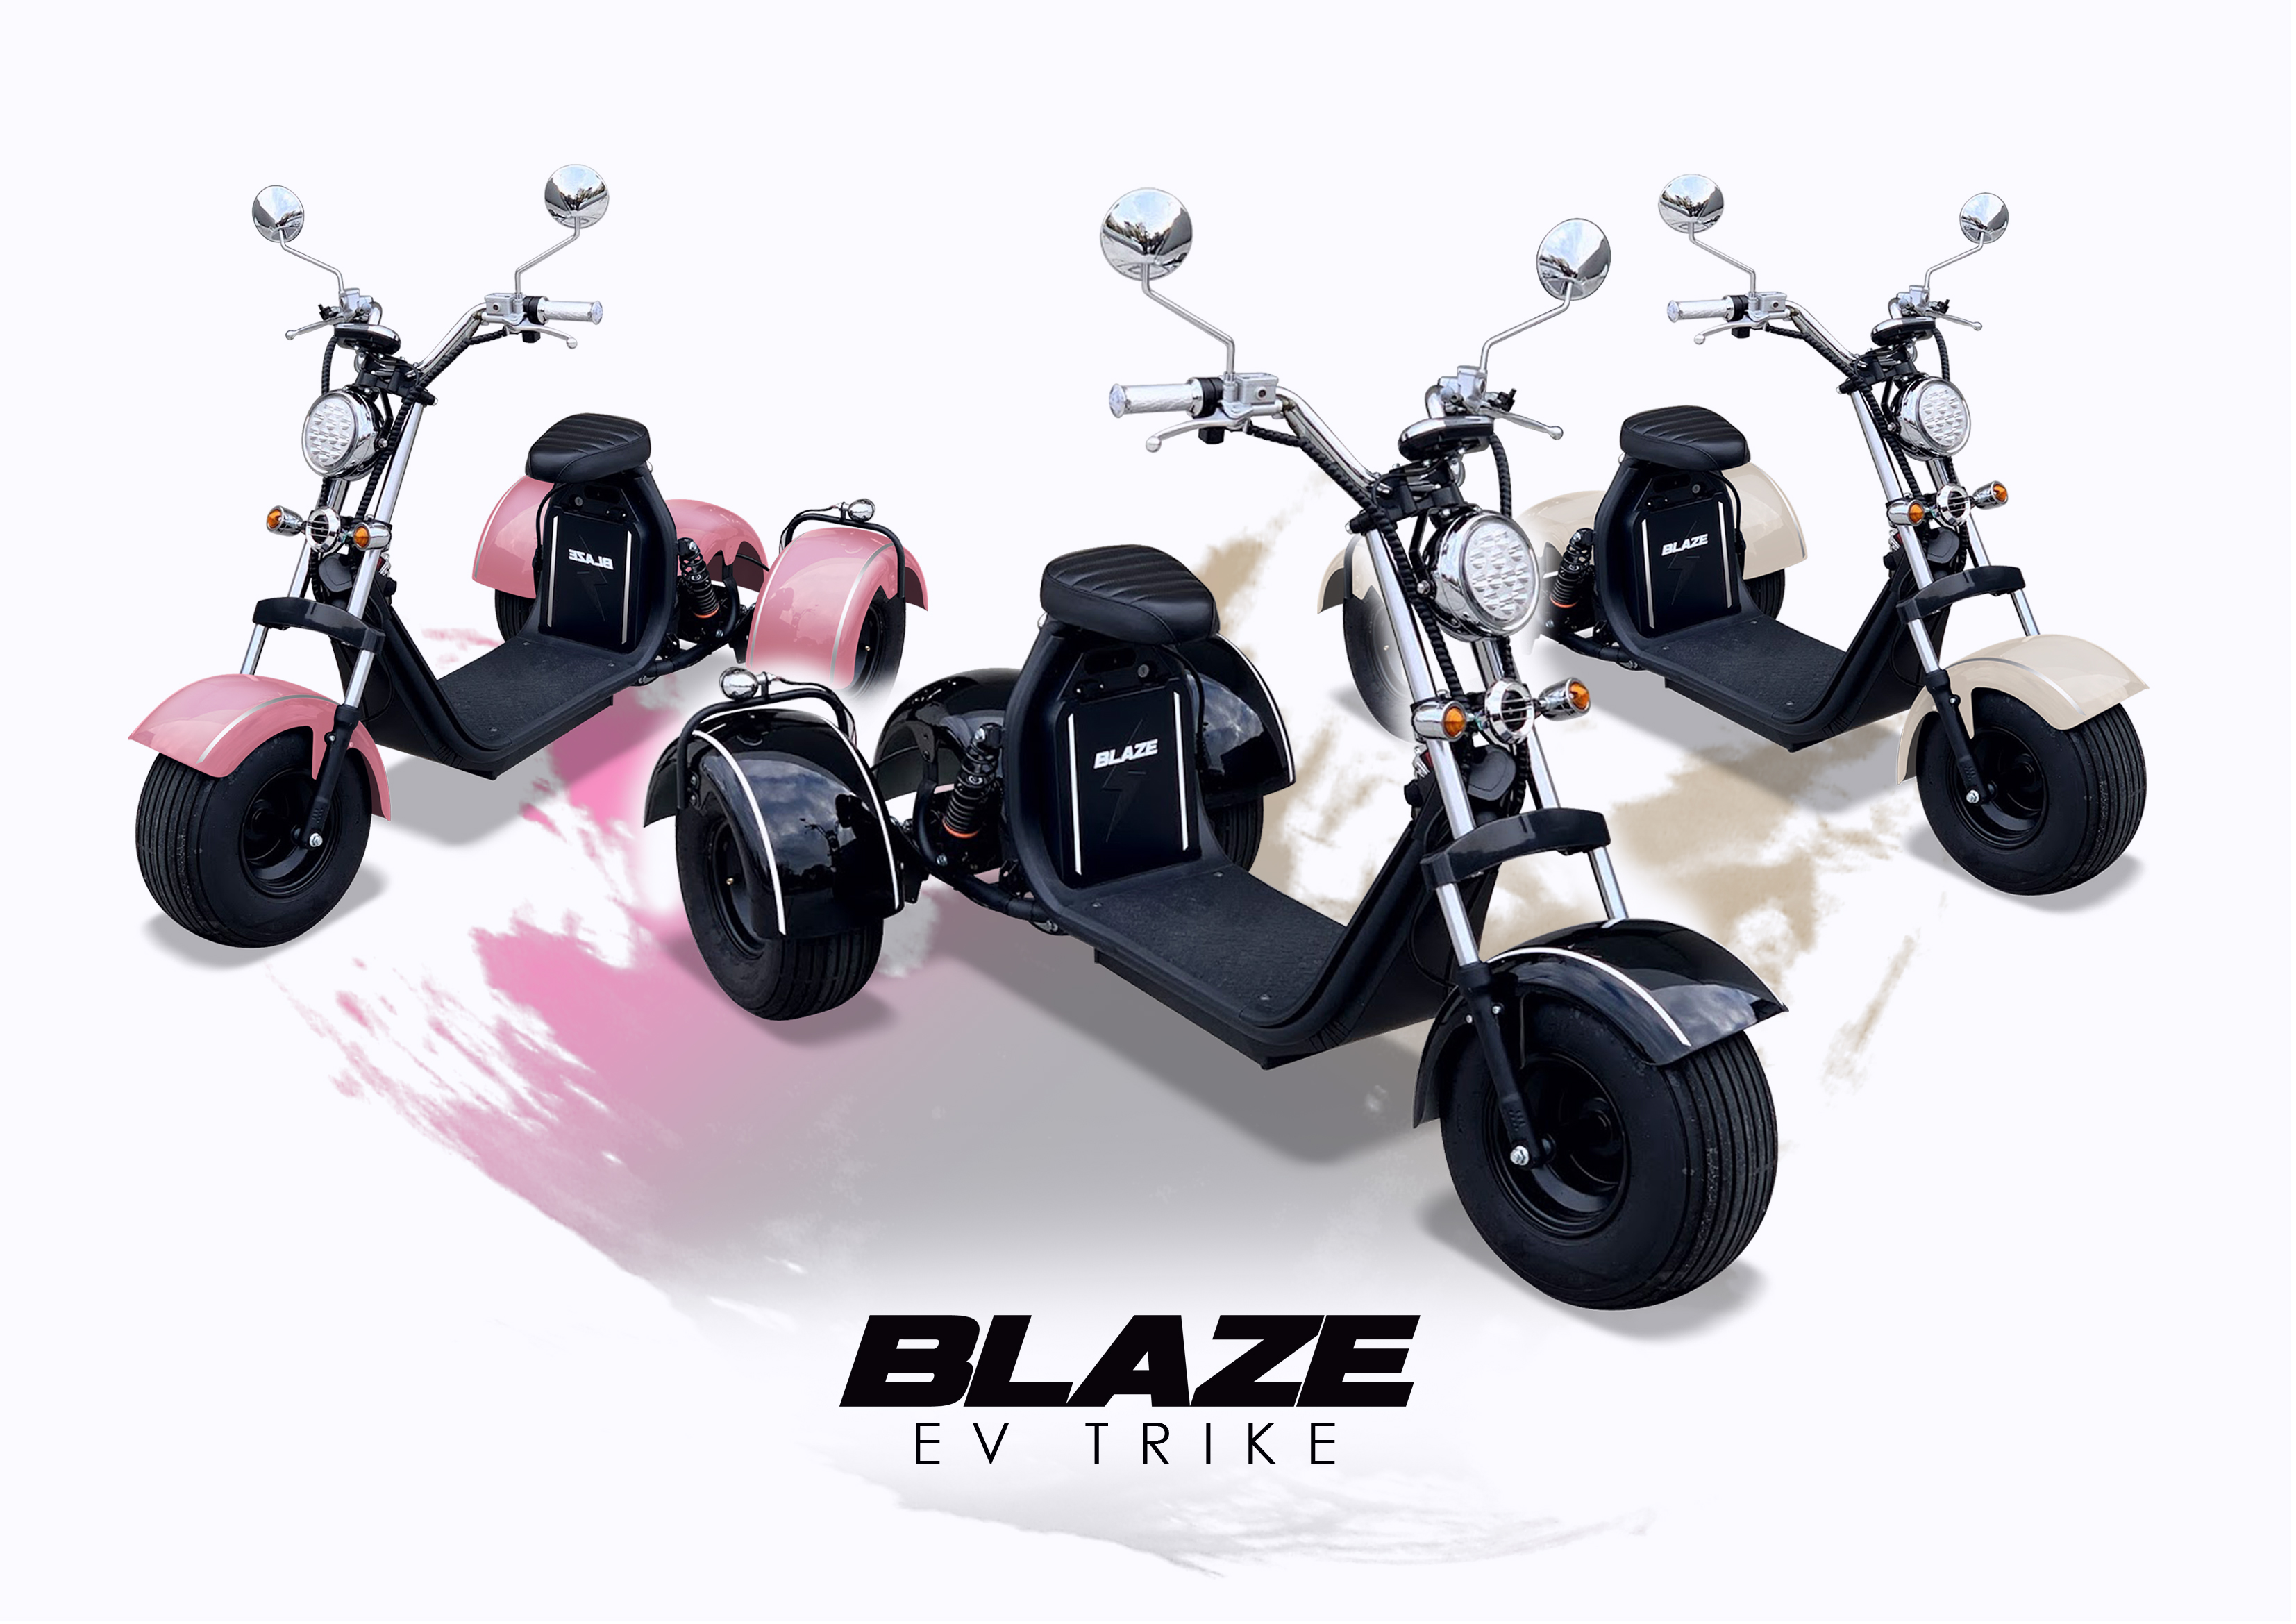 Blaze Ev Trike ブレイズevトライク 専用大型ラックが登場 株式会社ブレイズのプレスリリース